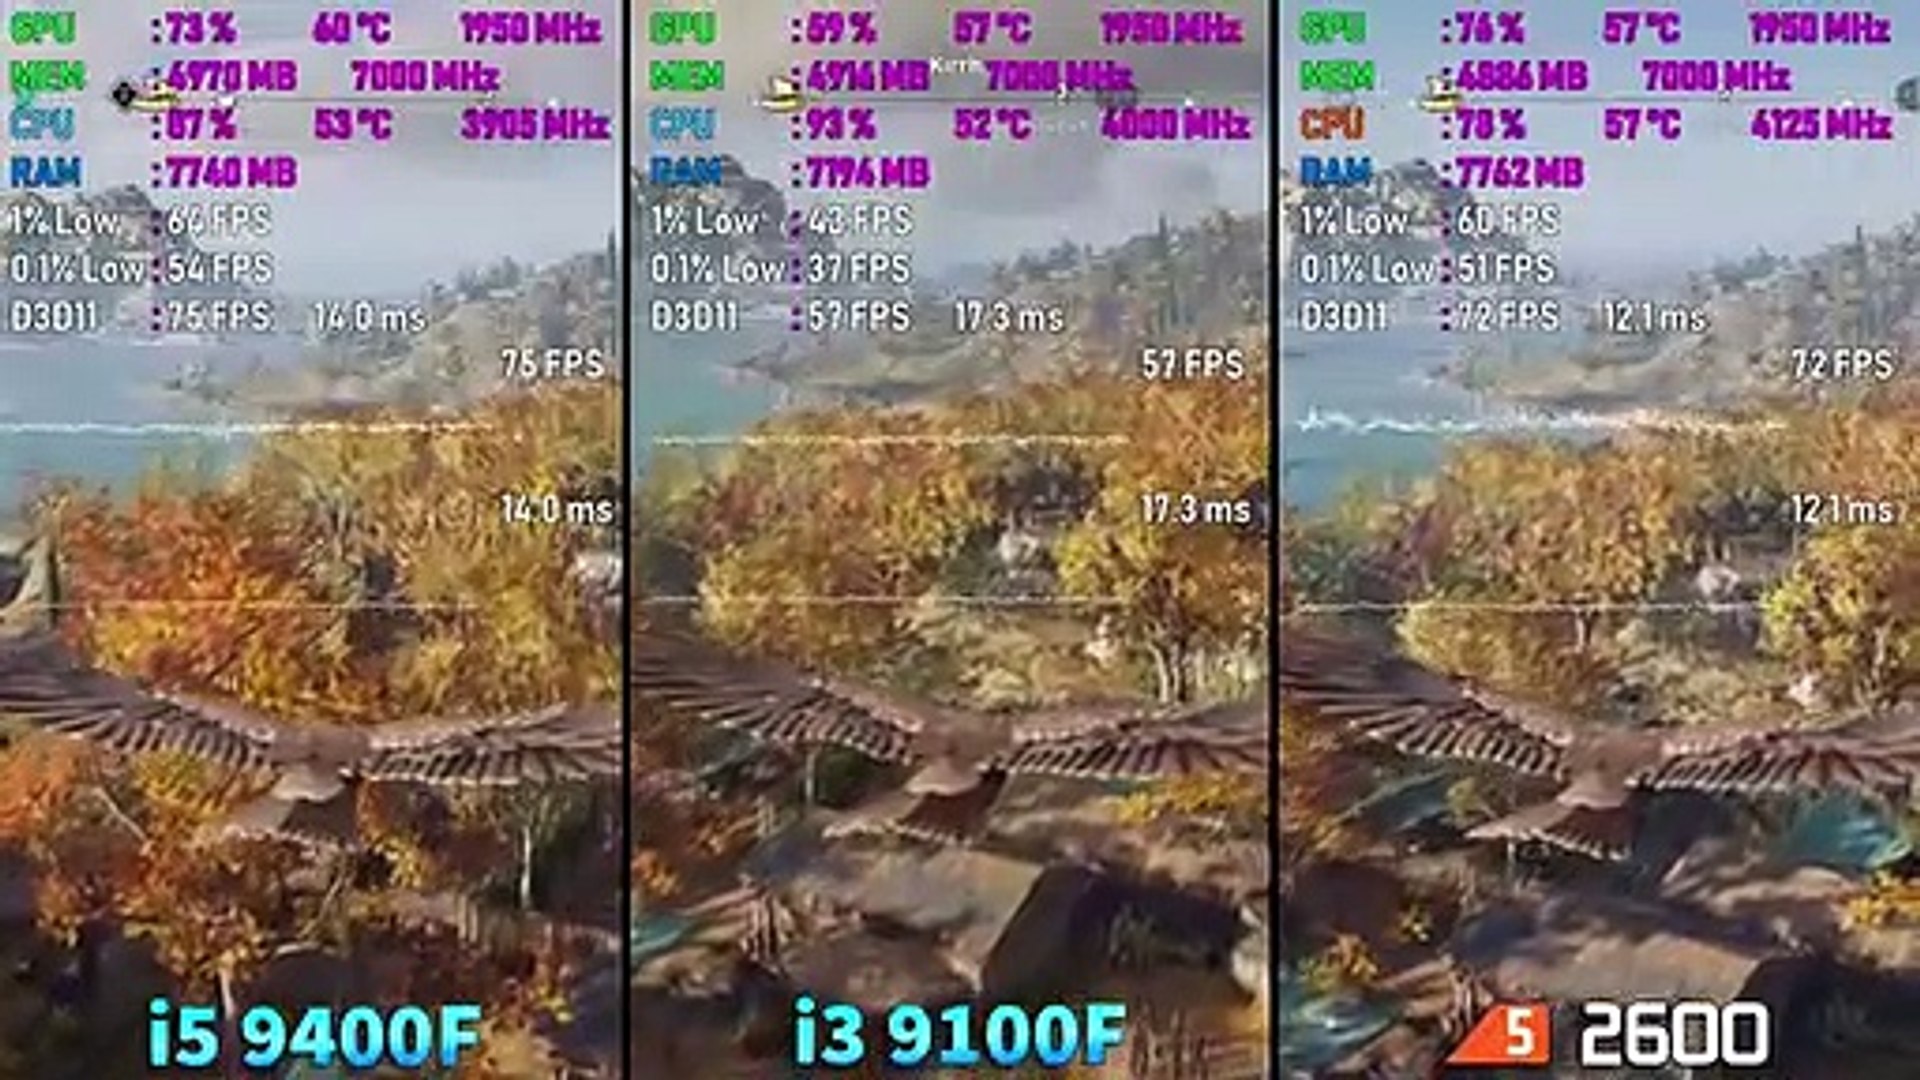 Core i3 9100F vs Core i5 9400F vs Ryzen 5 2600 Test in 10 Games - video  Dailymotion